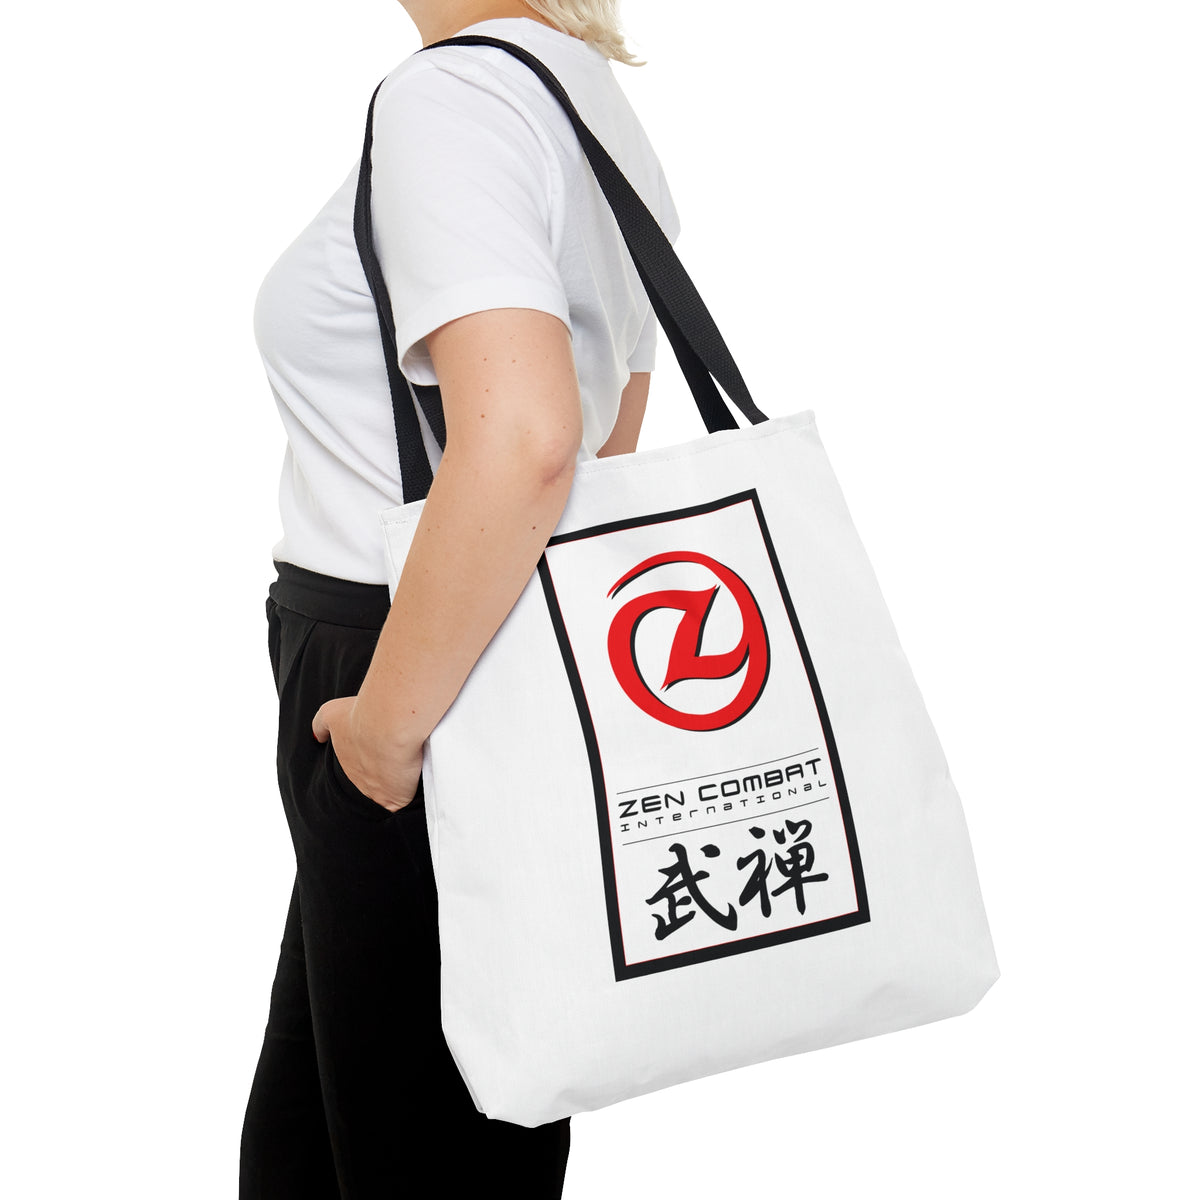 Zen Combat Tote Bag - White